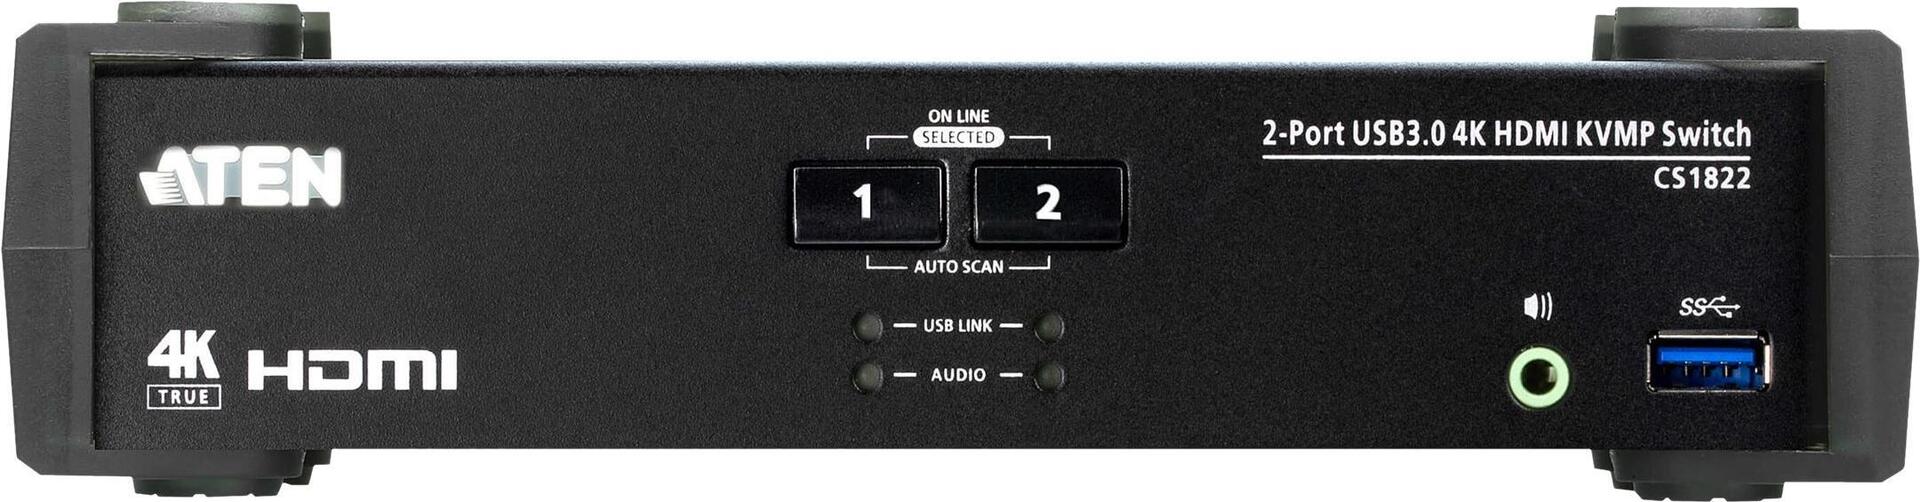 ATEN CS1822 KVMP Switch - KVM-/Audio-/USB-Switch - 2 x KVM/Audio/USB - 1 lokaler Benutzer - Desktop